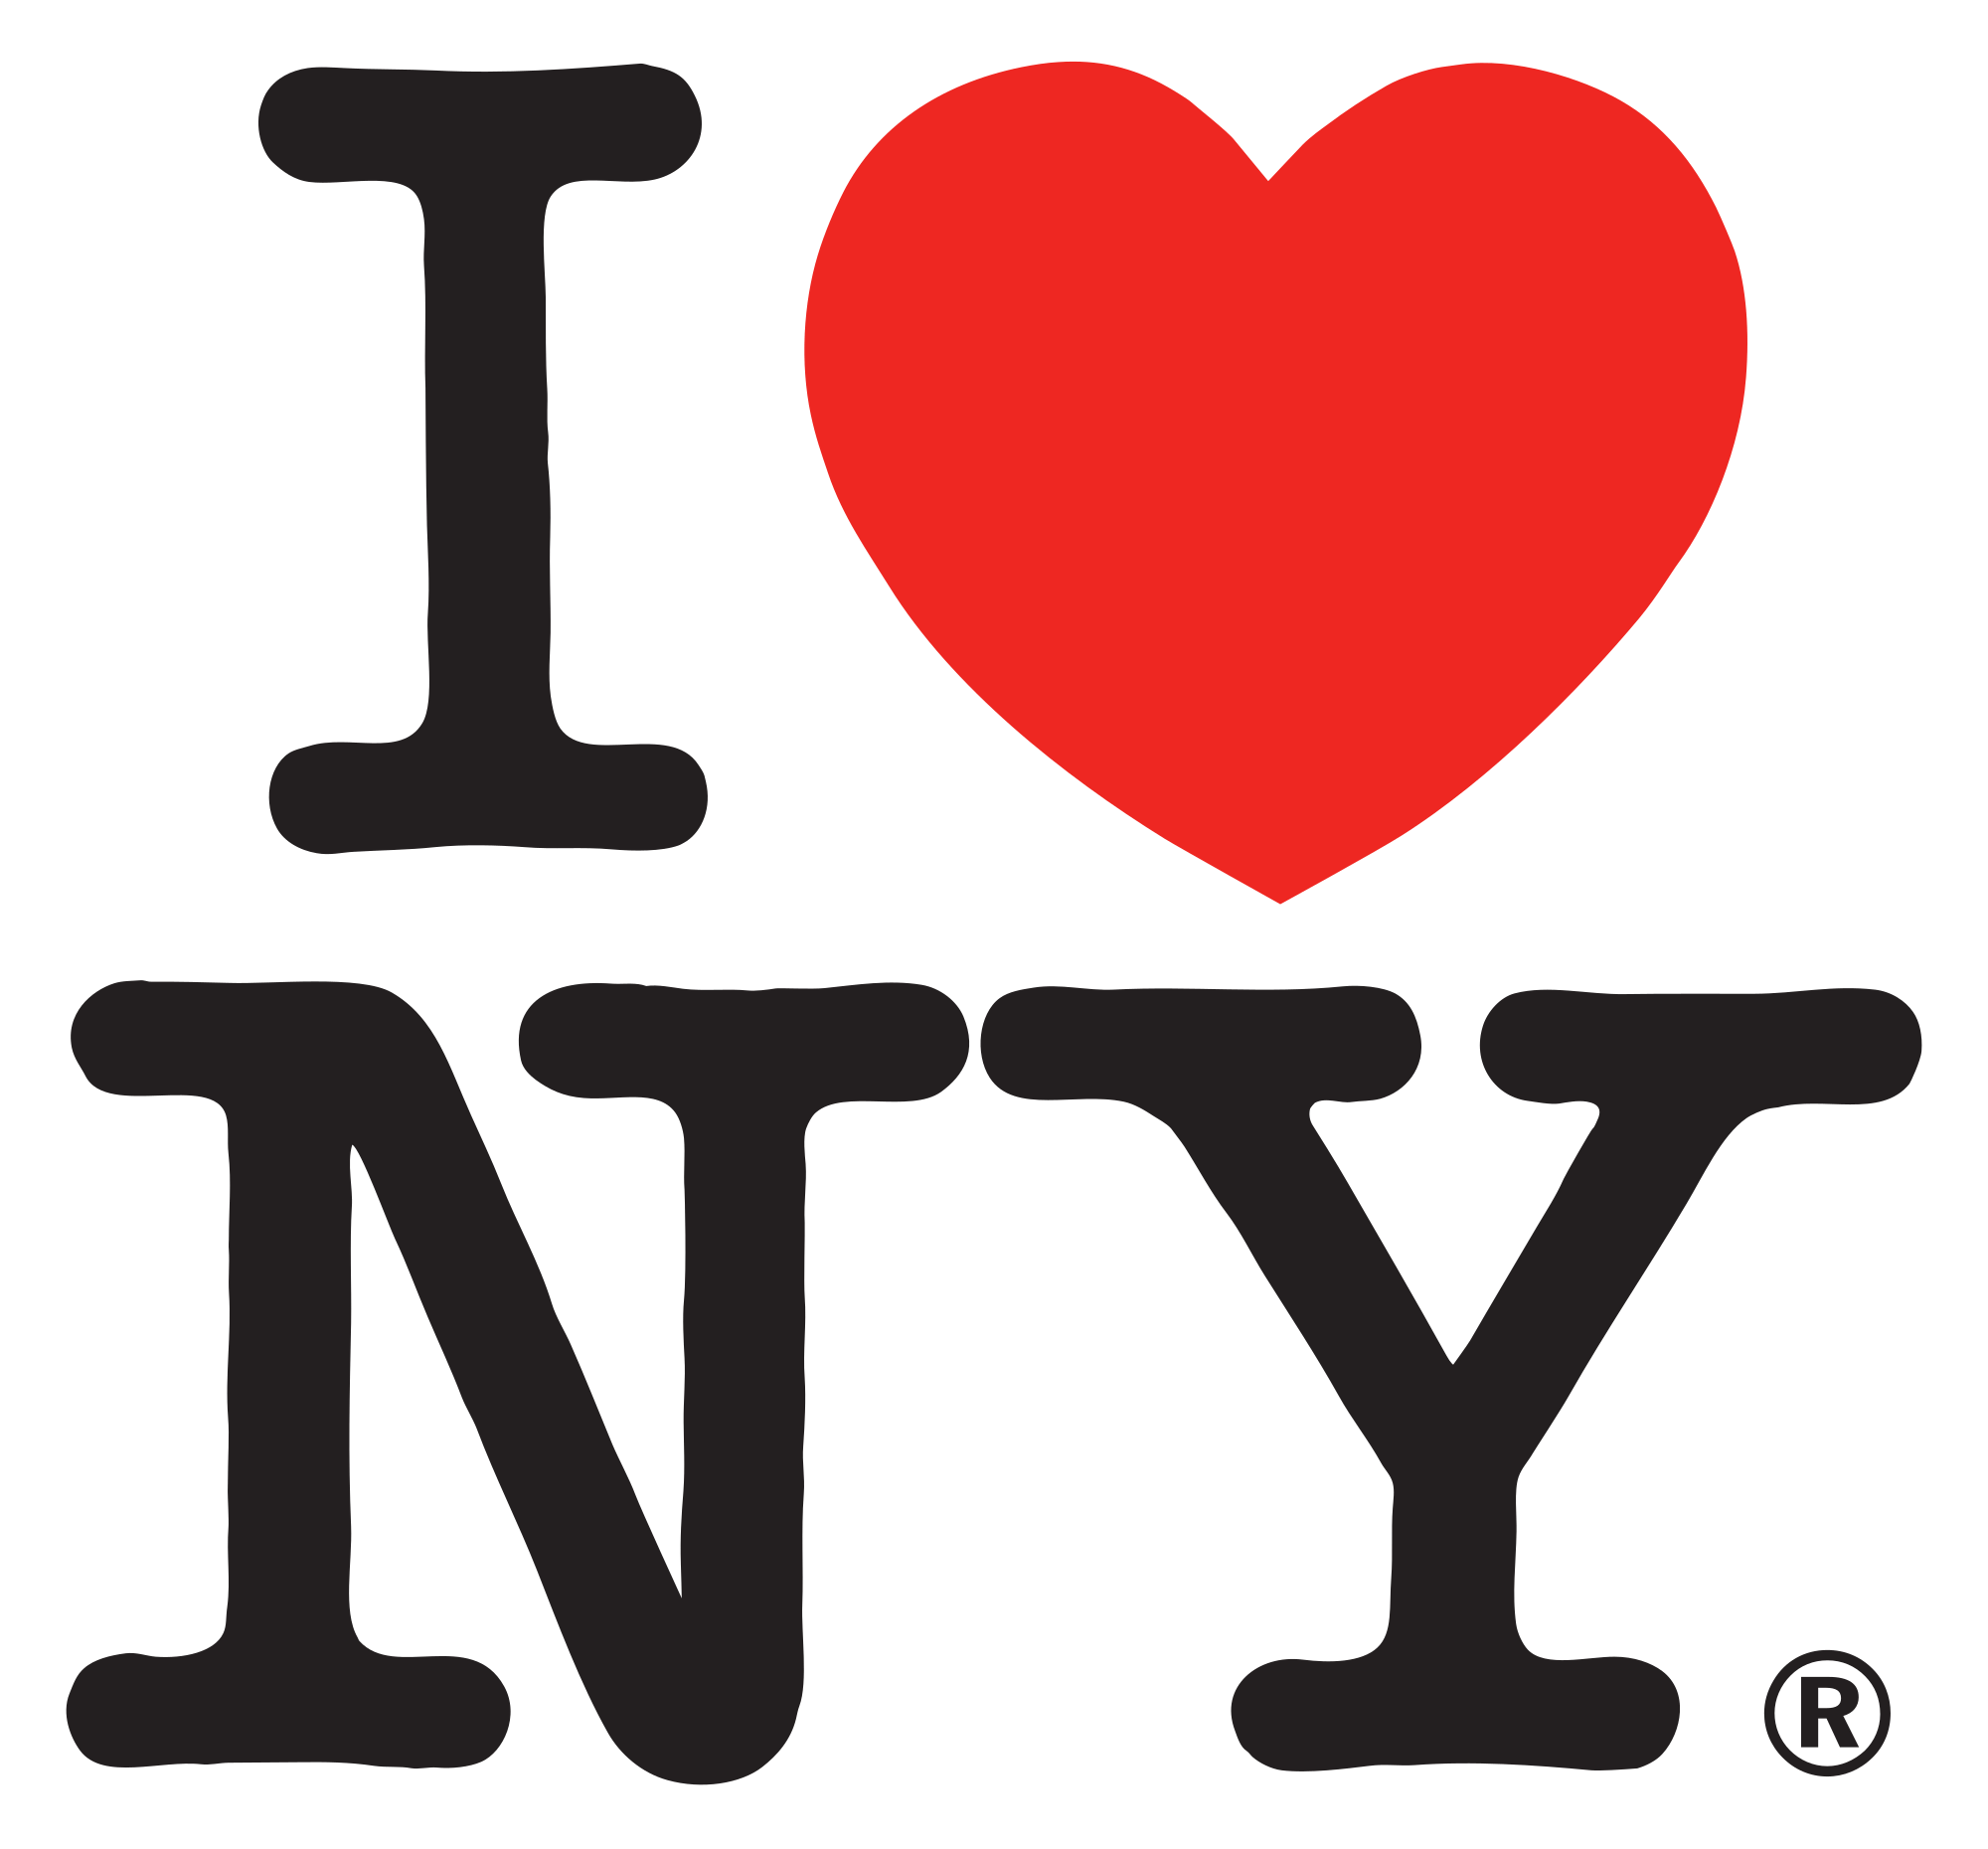 IL Logo - I Love New York